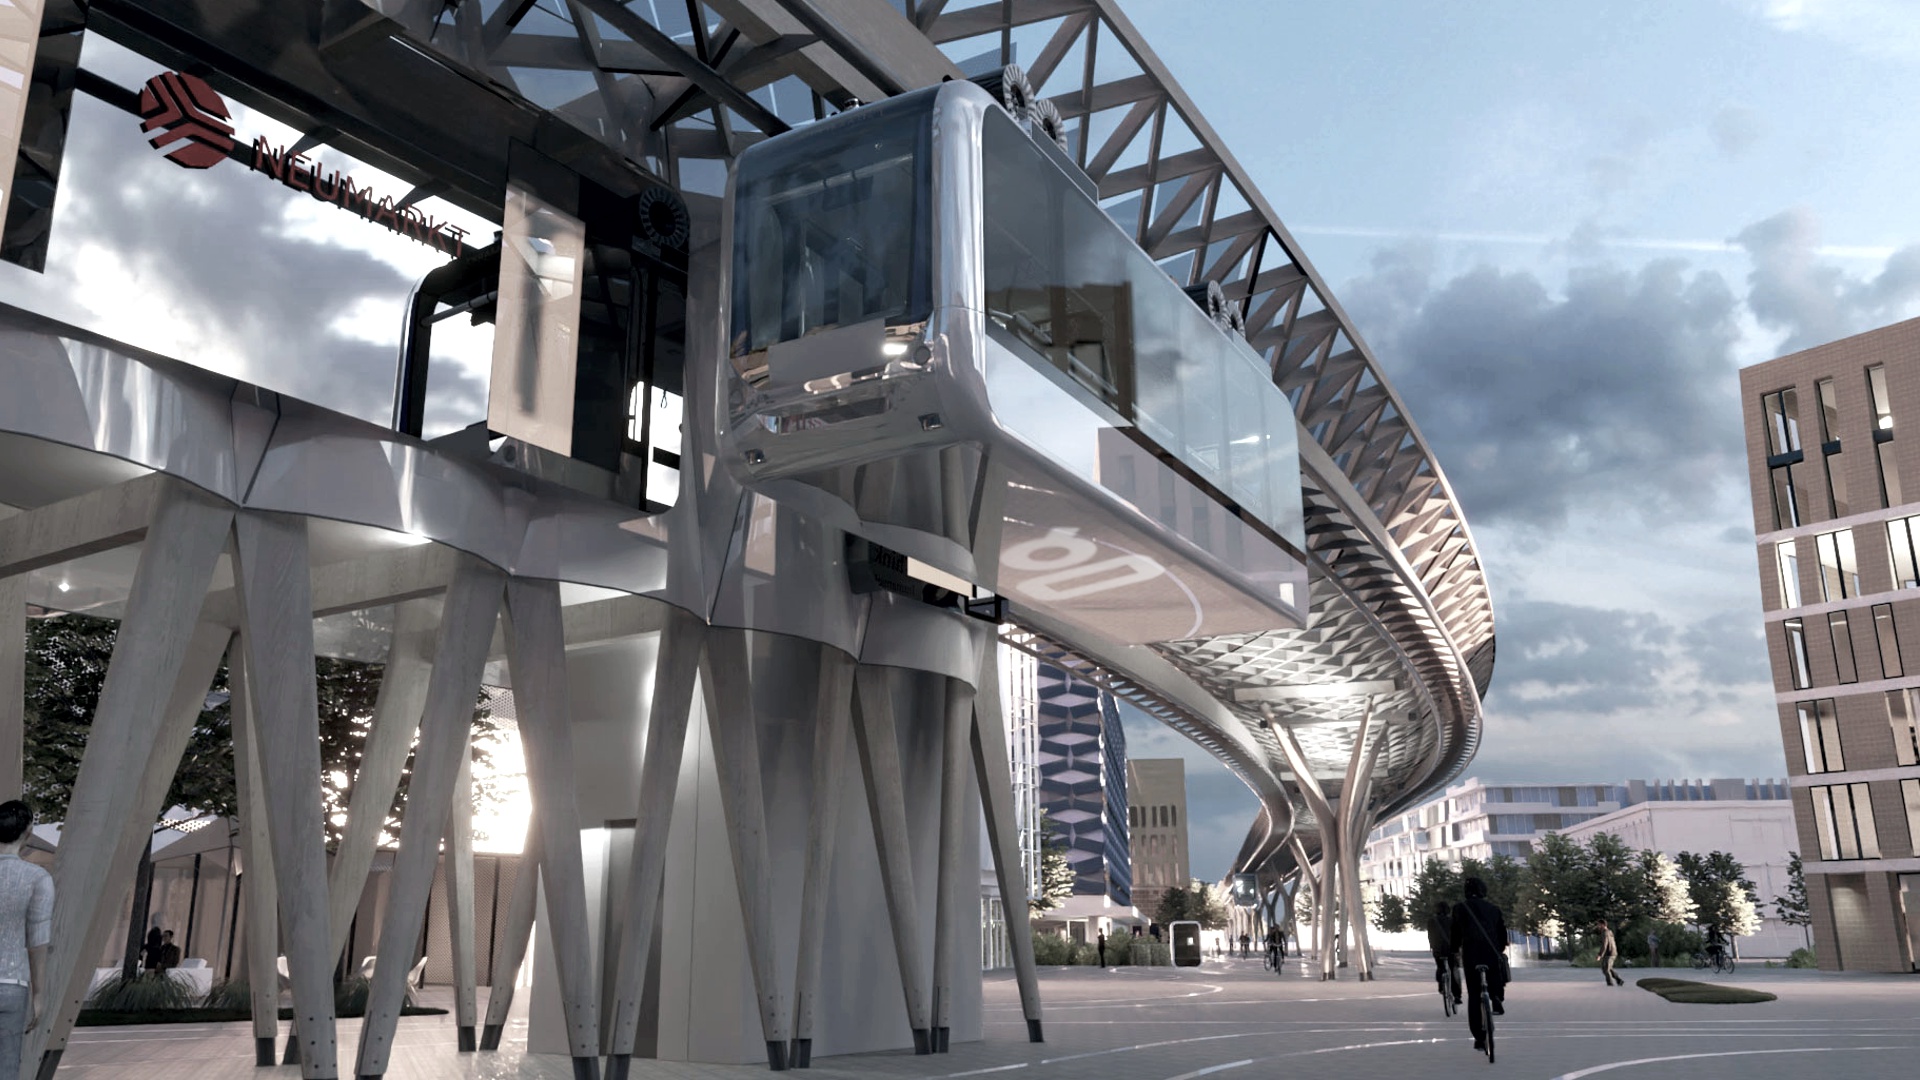 London Design Awards Winner - SUNGLIDER Smart Uberground Metros